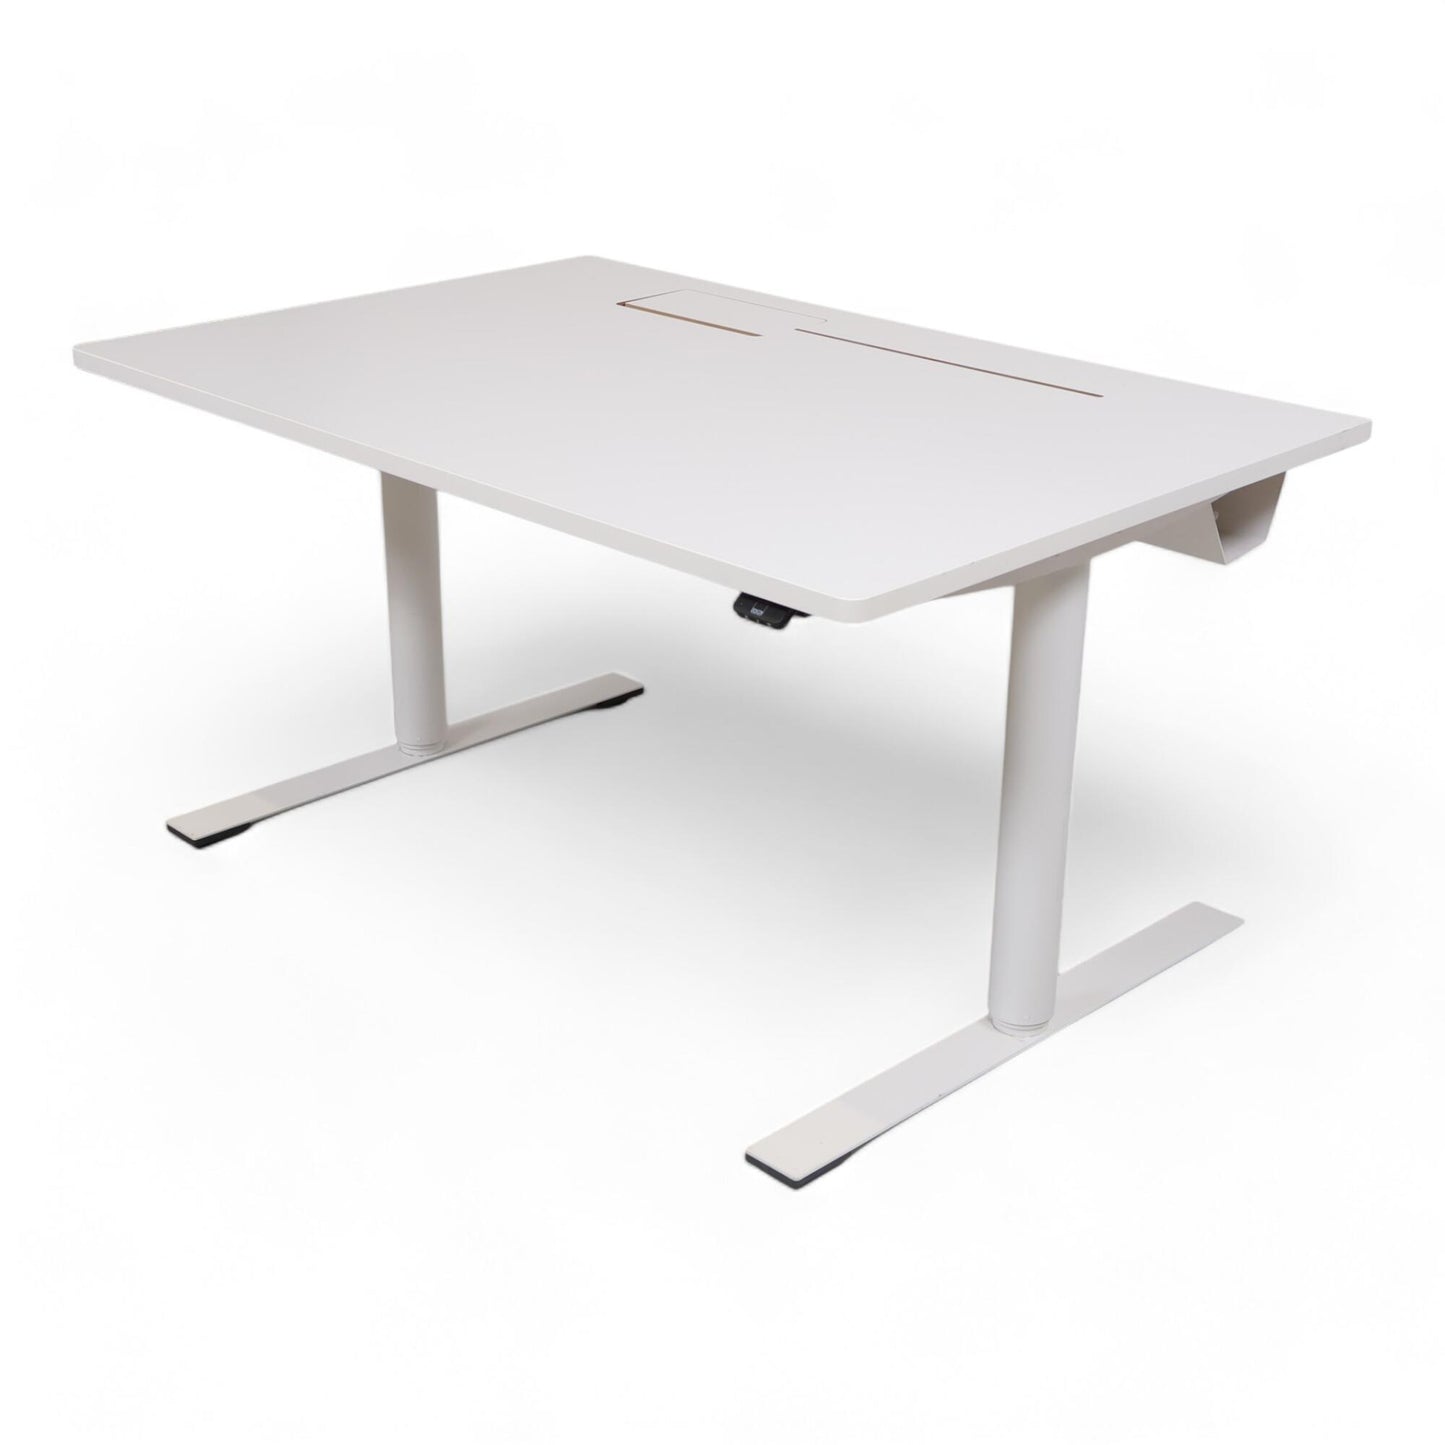 Kvalitetssikret | Hvit Dencon Delta elektriske hev/senk skrivebord 120x80cm